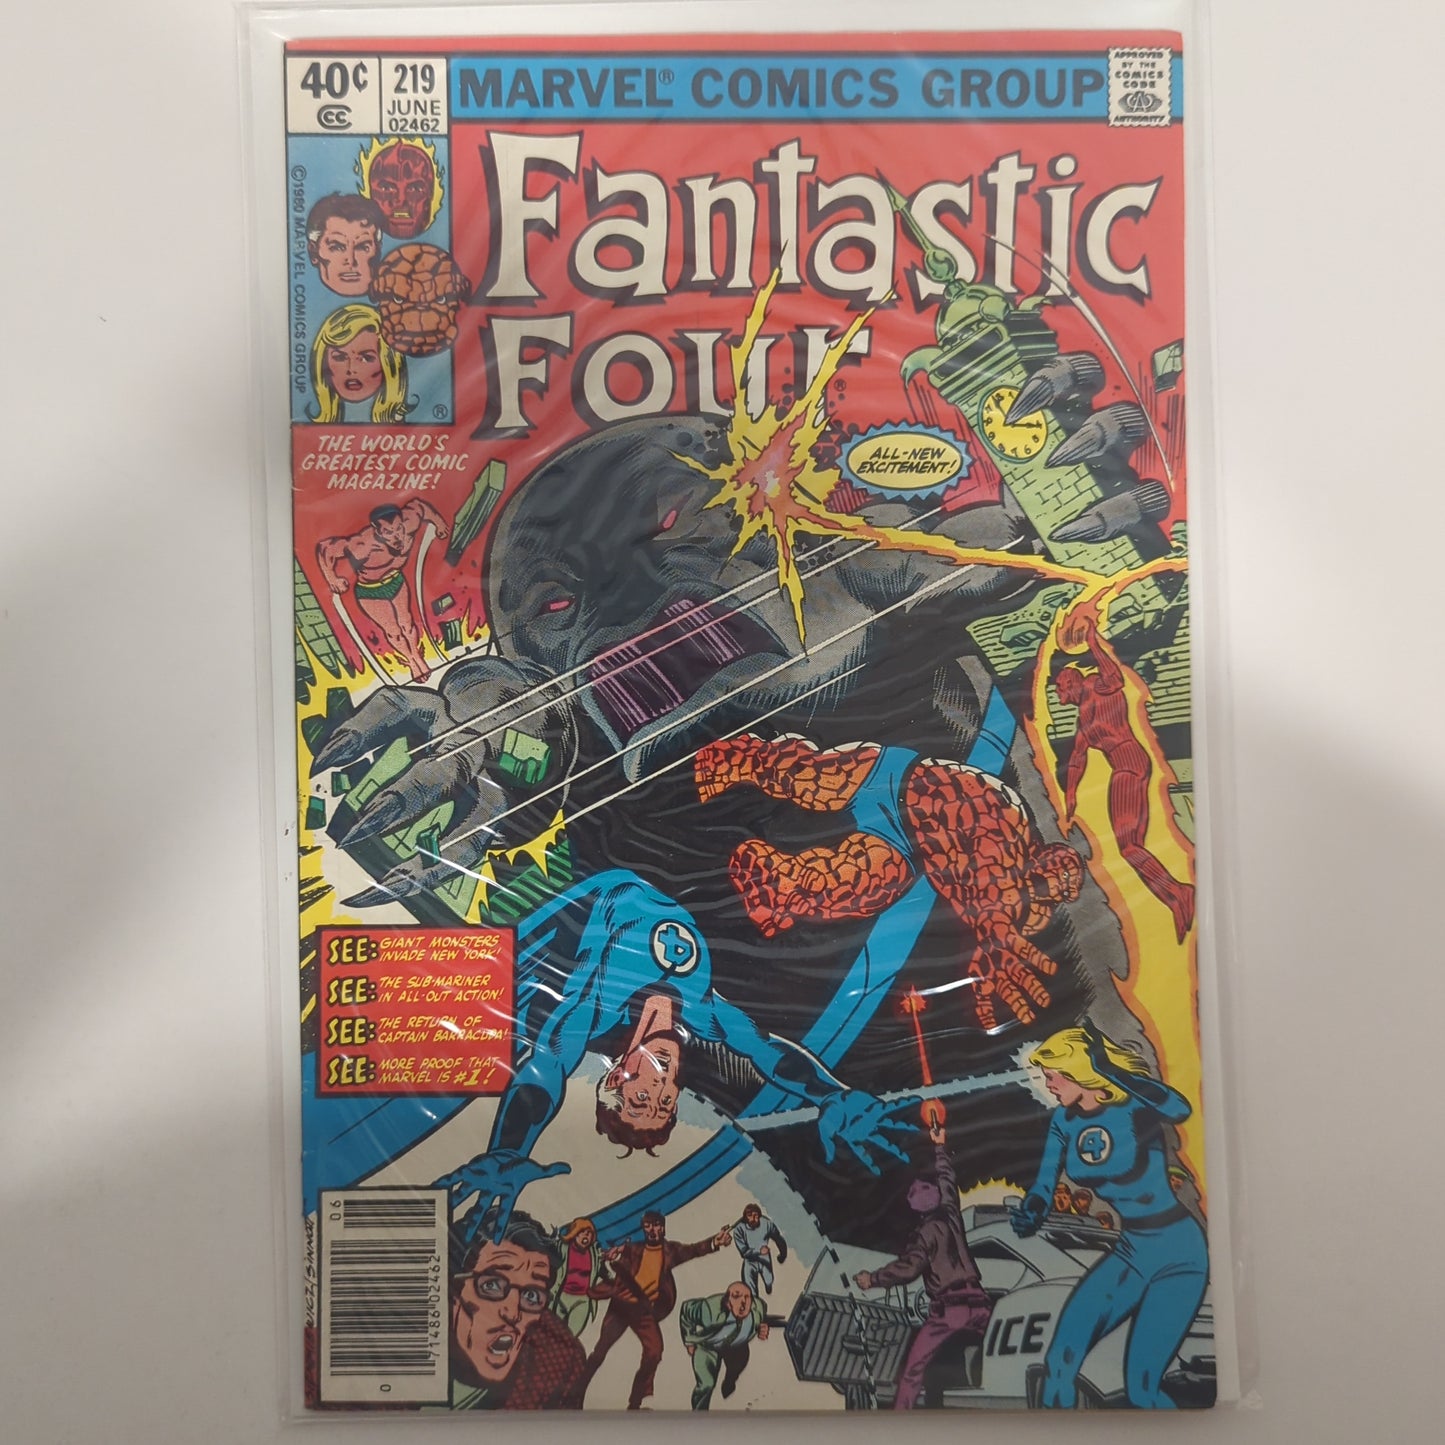 Fantastic Four #219 Newsstand